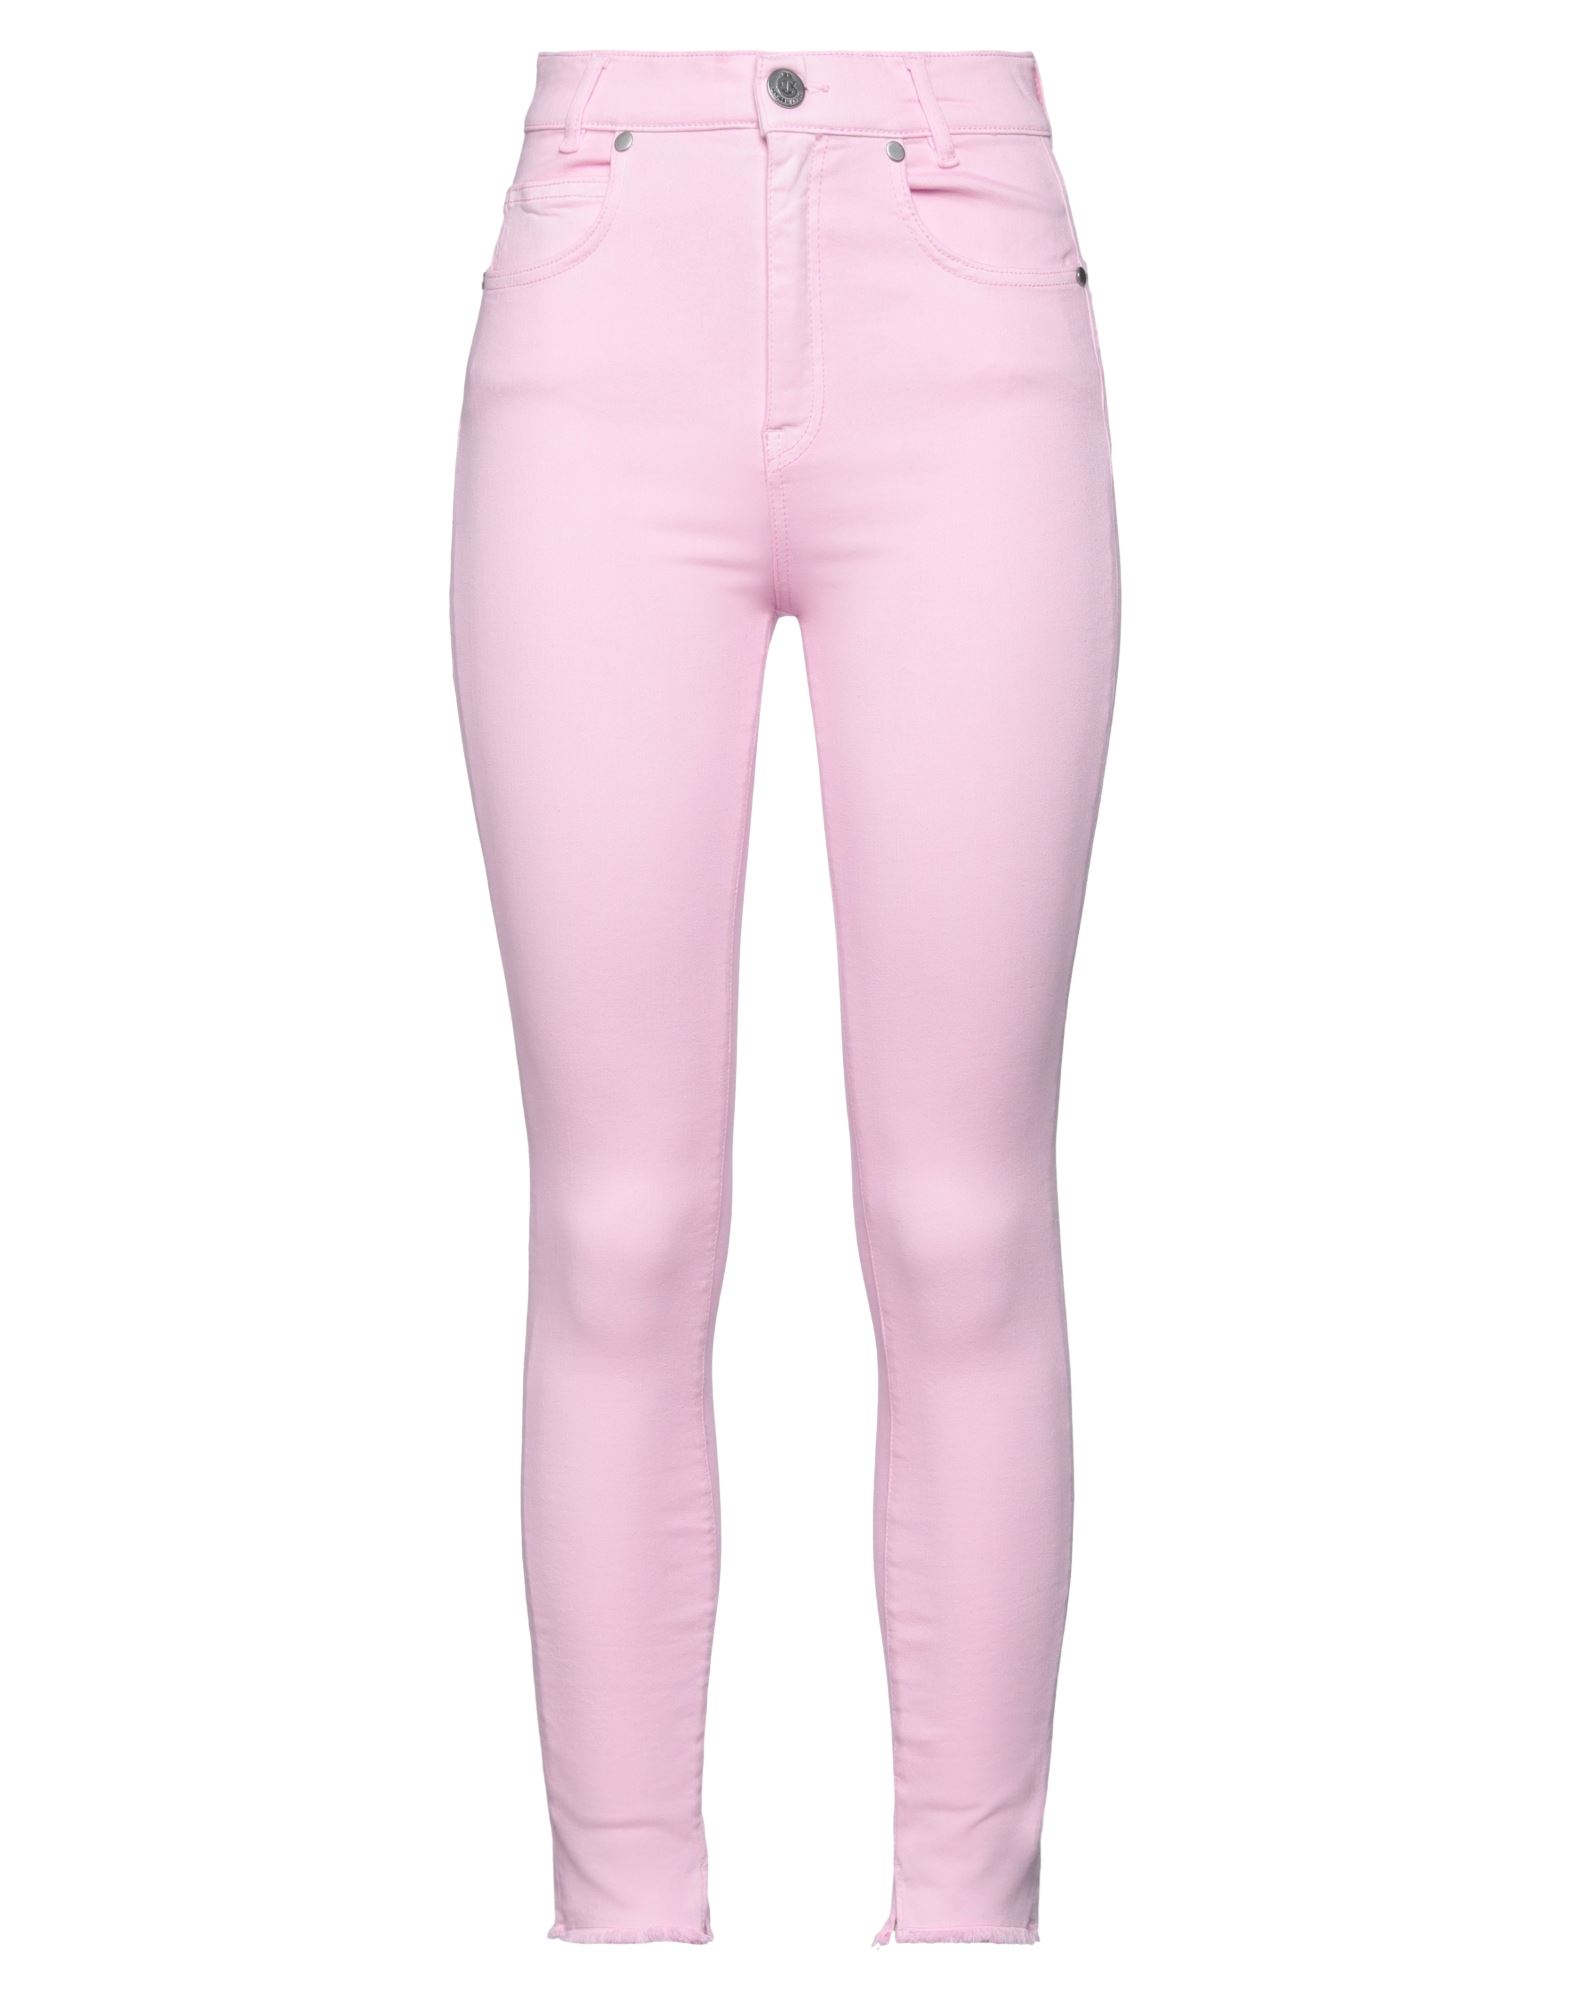 Gaelle Paris Jeans In Pink